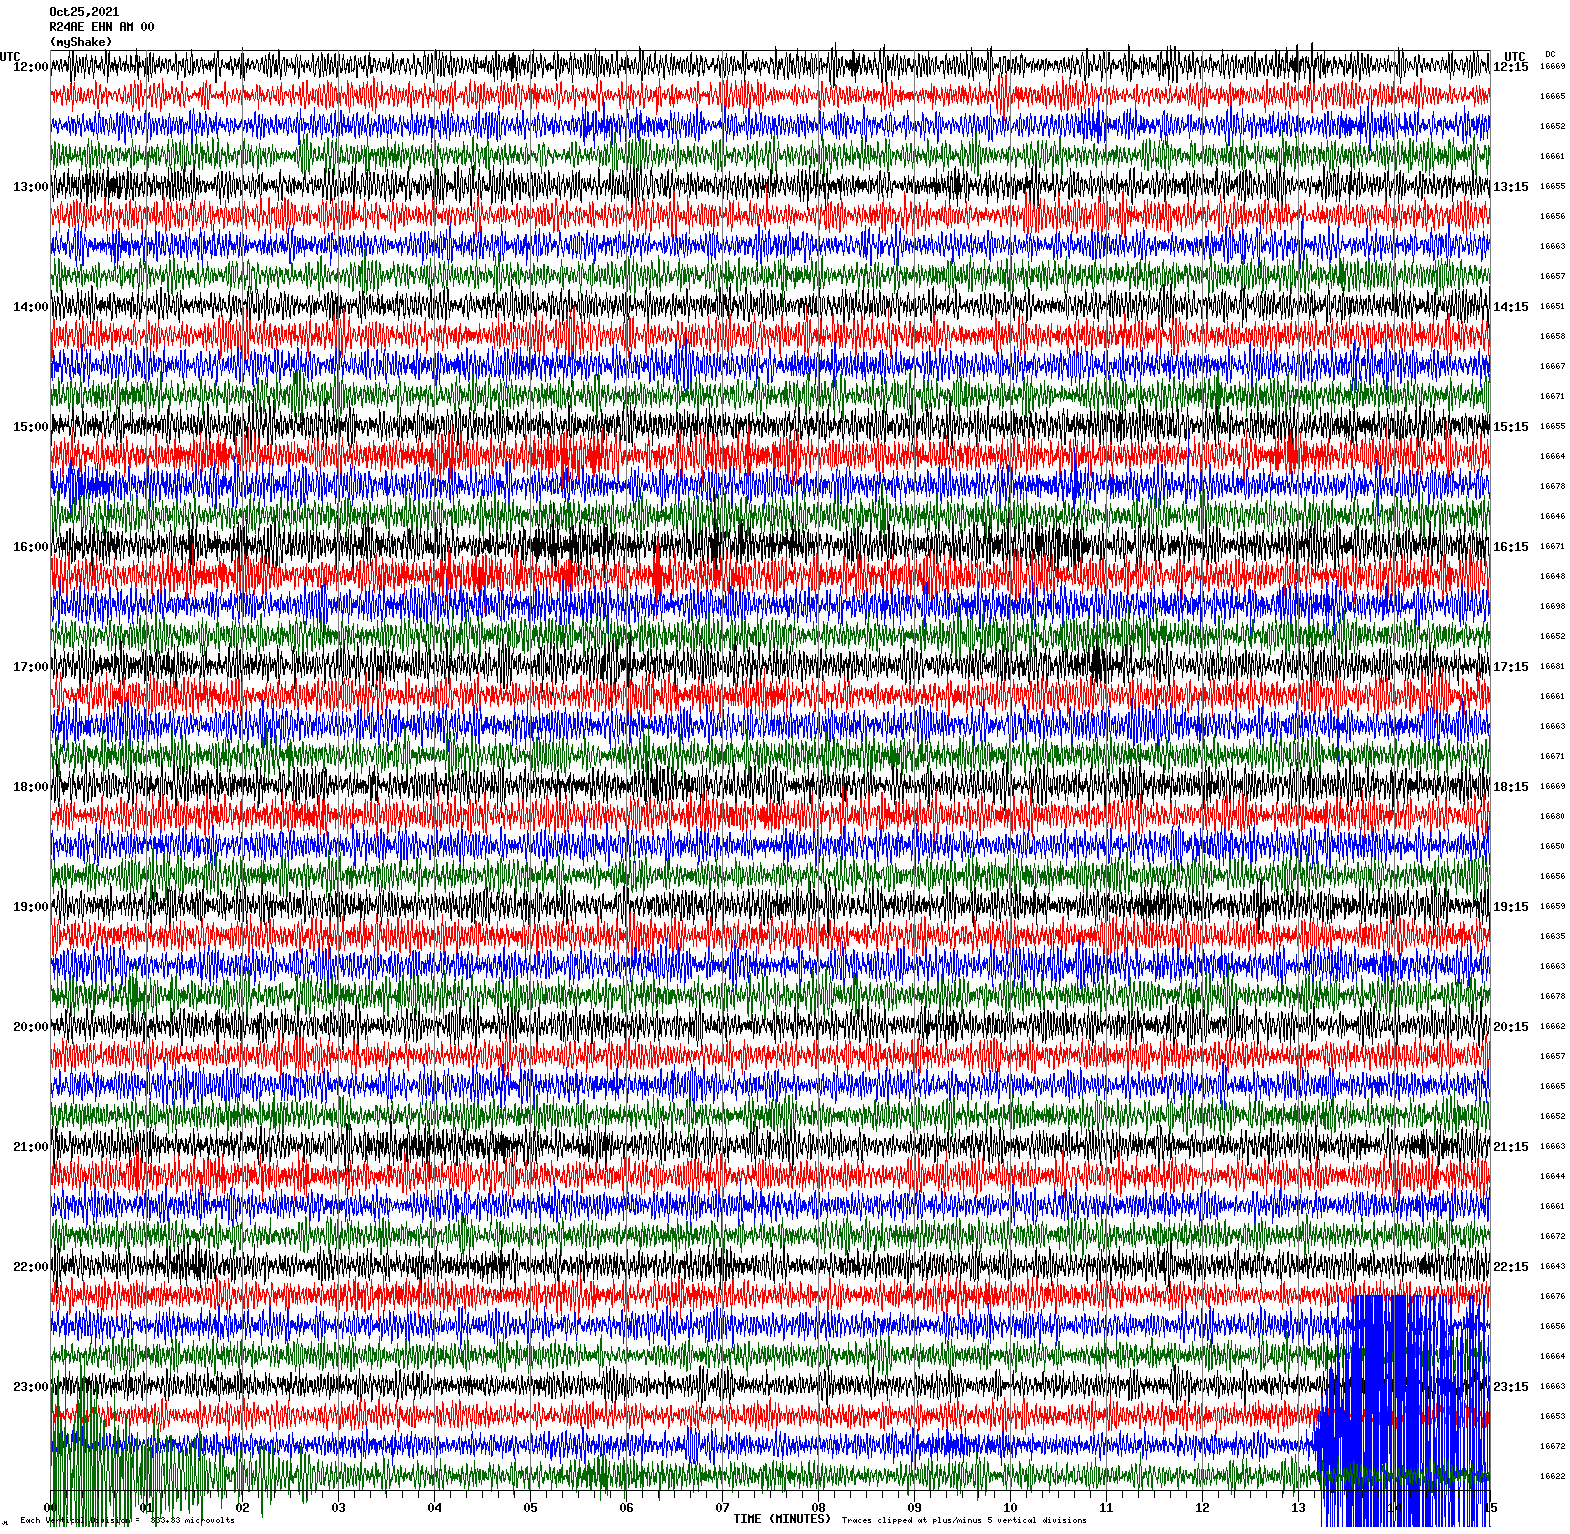 /seismic-data/R24AE/R24AE_EHN_AM_00.2021102512.gif